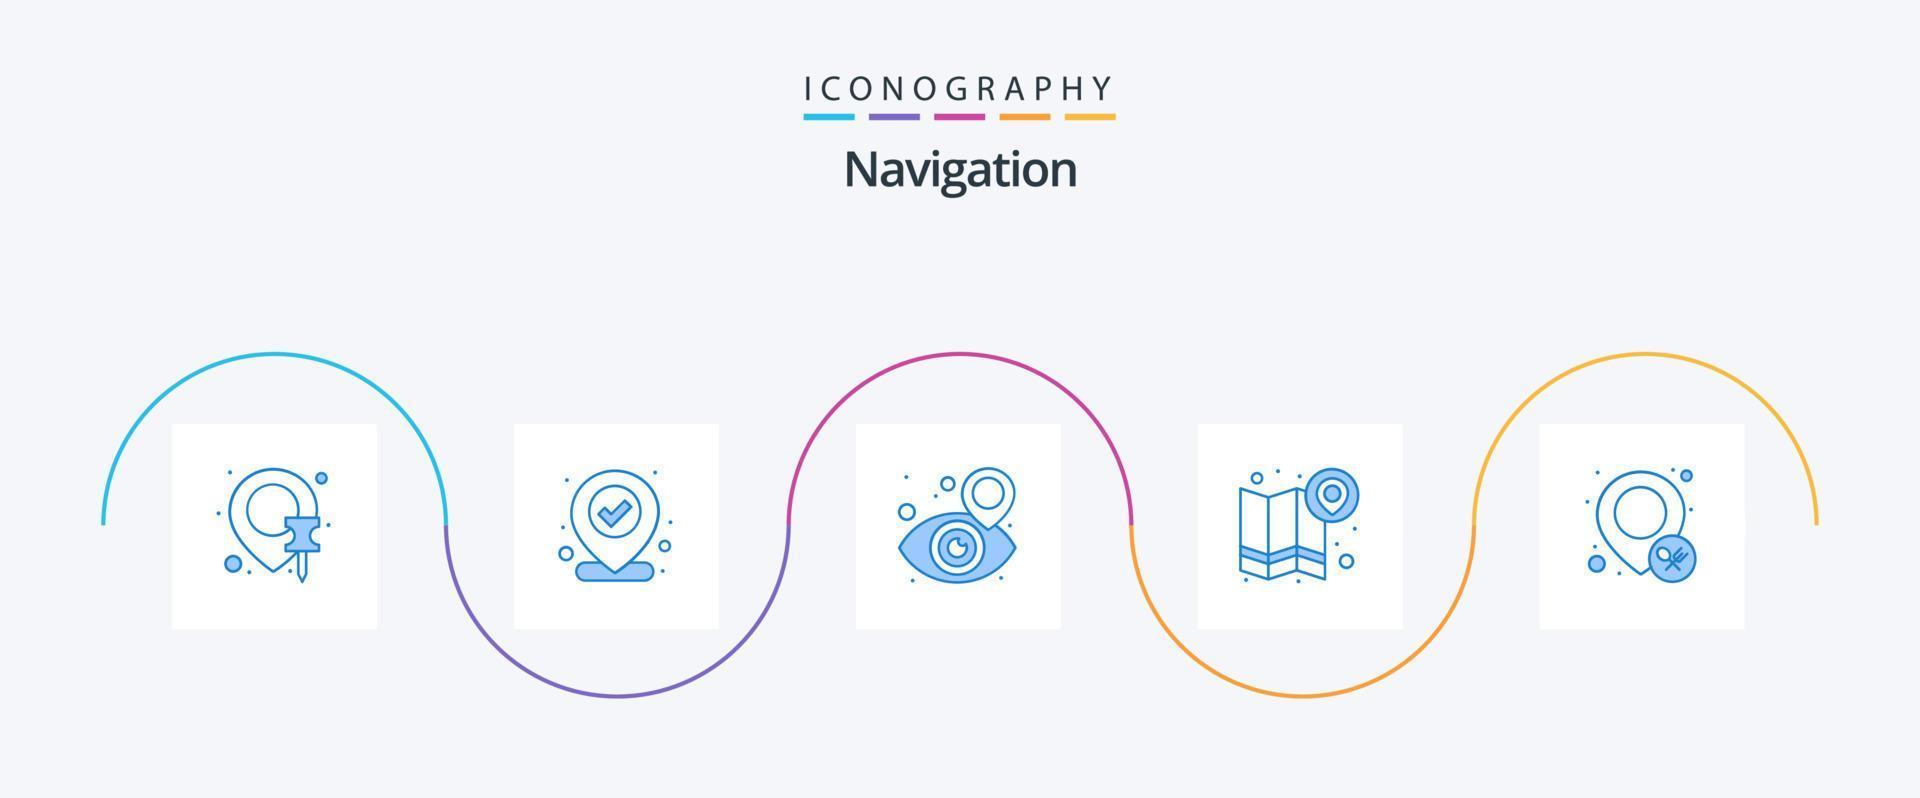 paquete de iconos de navegación azul 5 que incluye ubicación. navegación. ojo. dirección. mapa vector